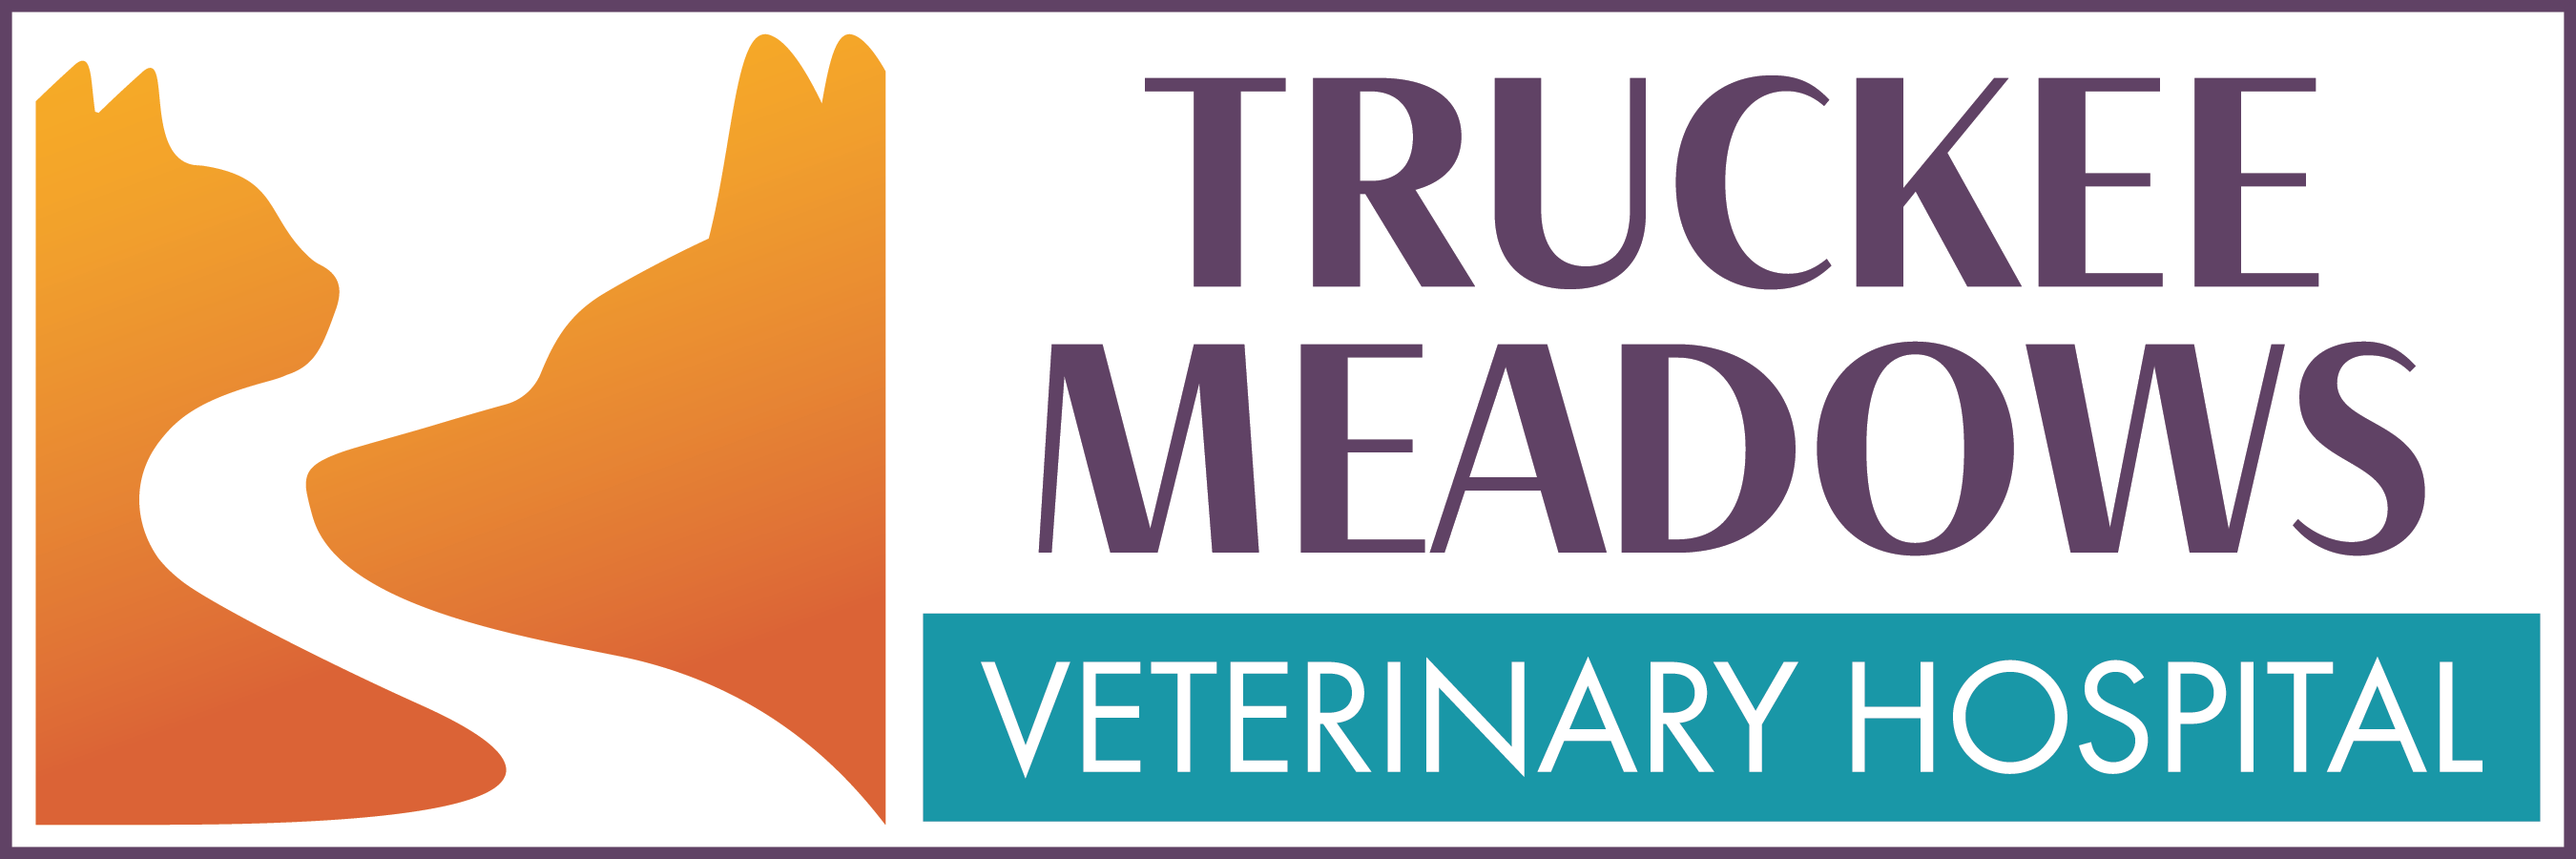 Truckee Meadows Veterinary Hospital